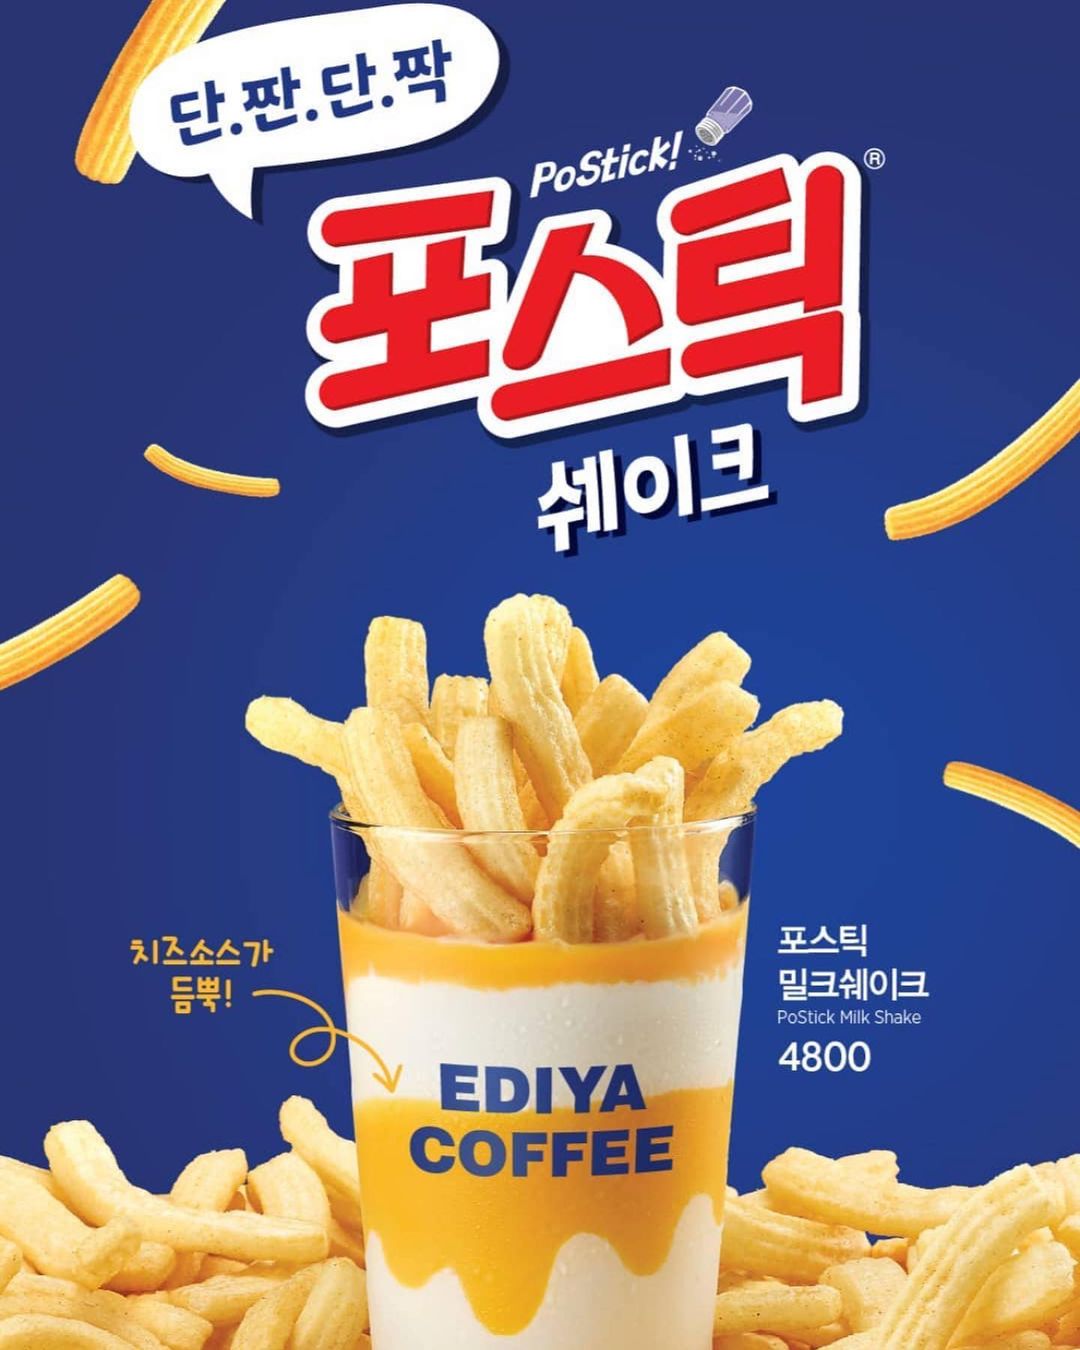 Potato Stick Milkshake - promotional poster